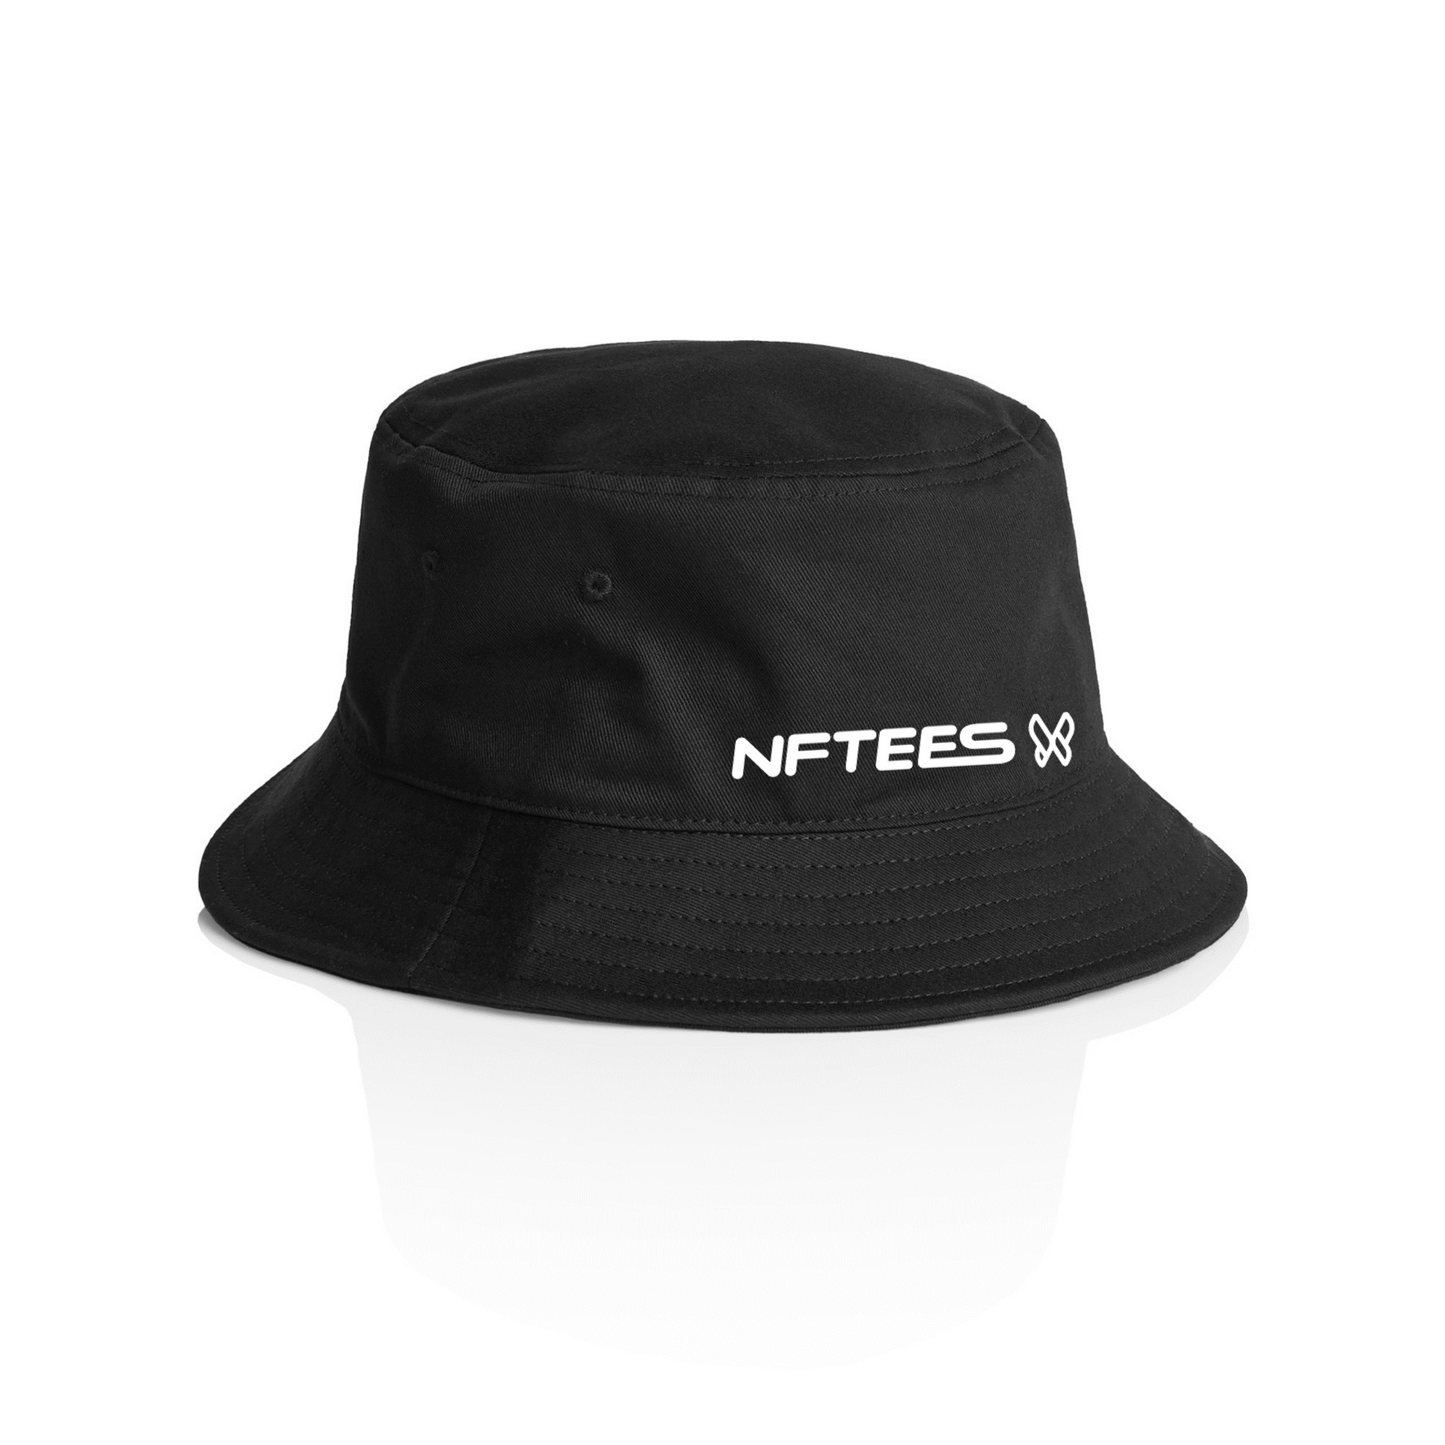 The NFTees Basics Bucket Hat